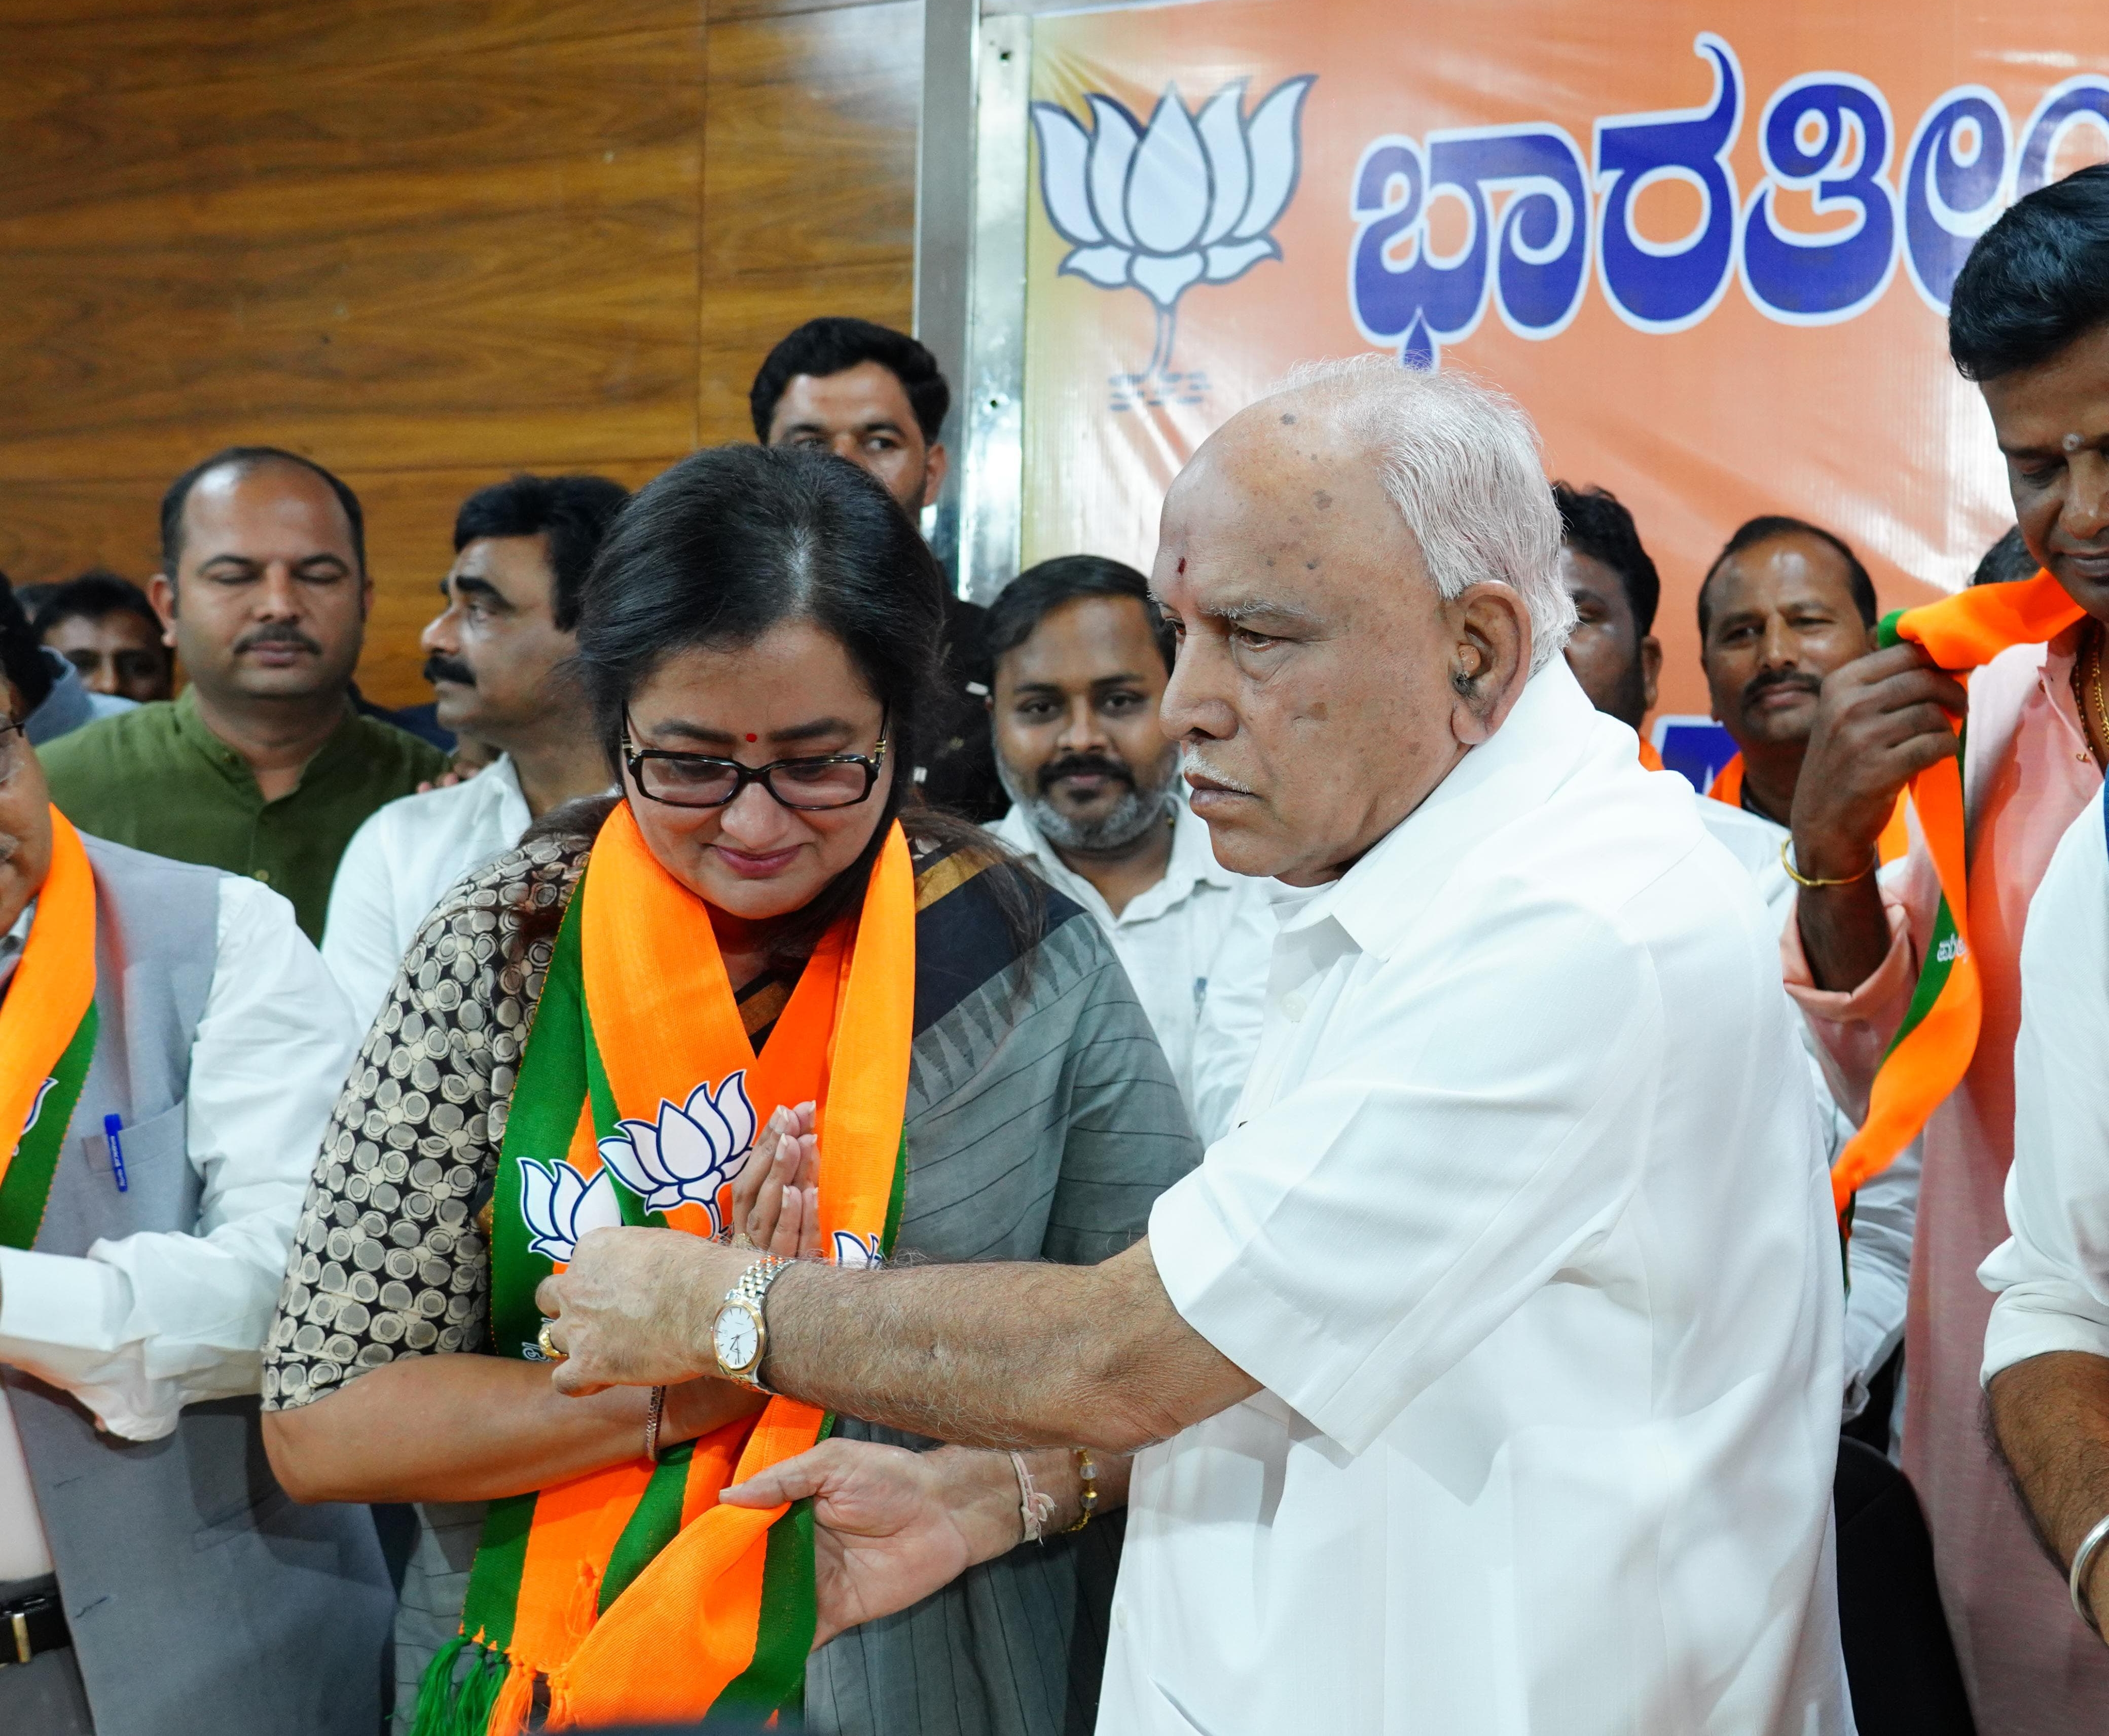 MP Sumalata Ambarish has officially joined the BJP